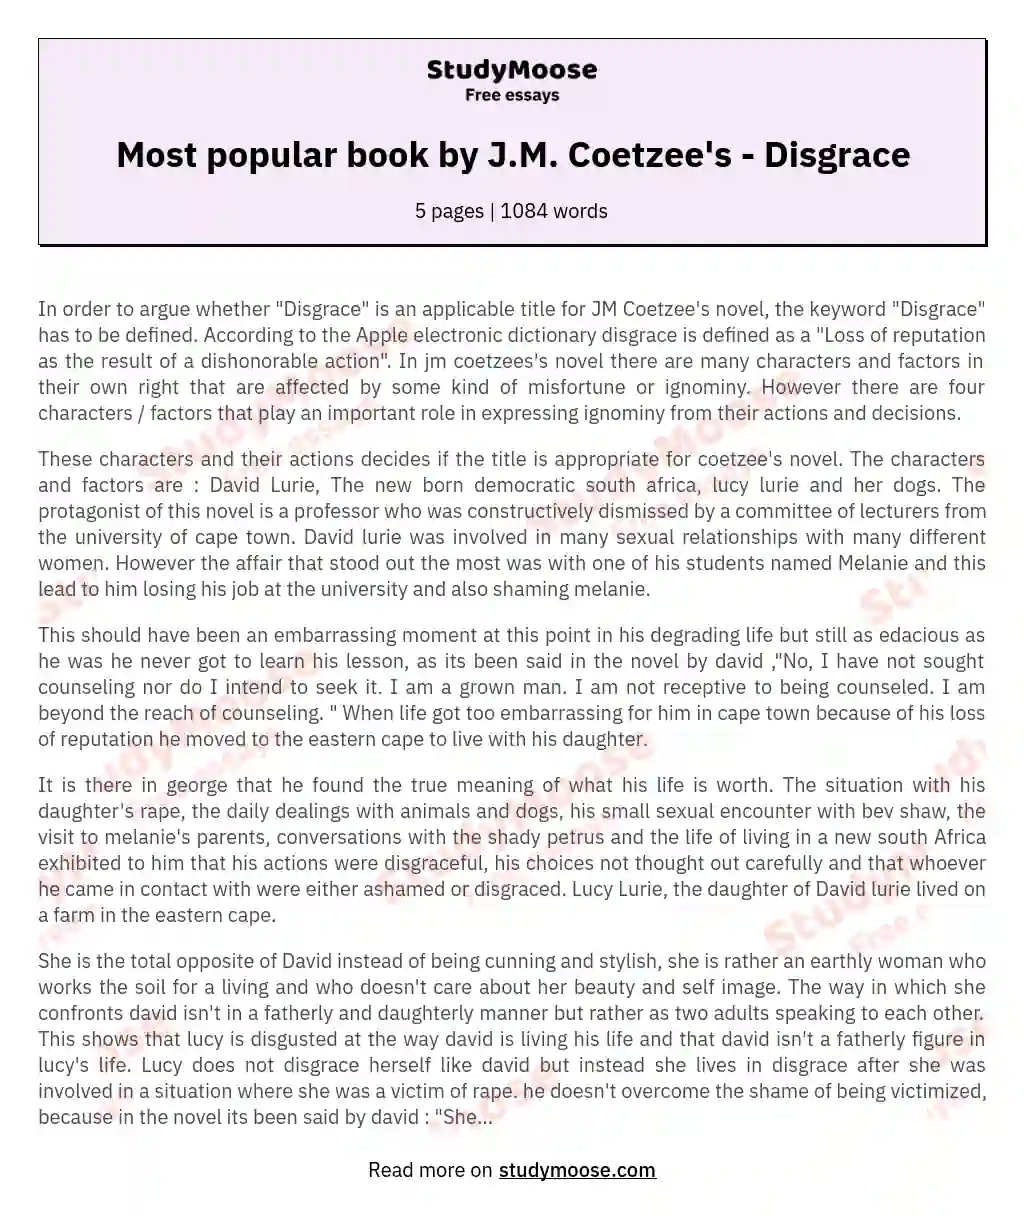 Most popular book by J.M. Coetzee's - Disgrace